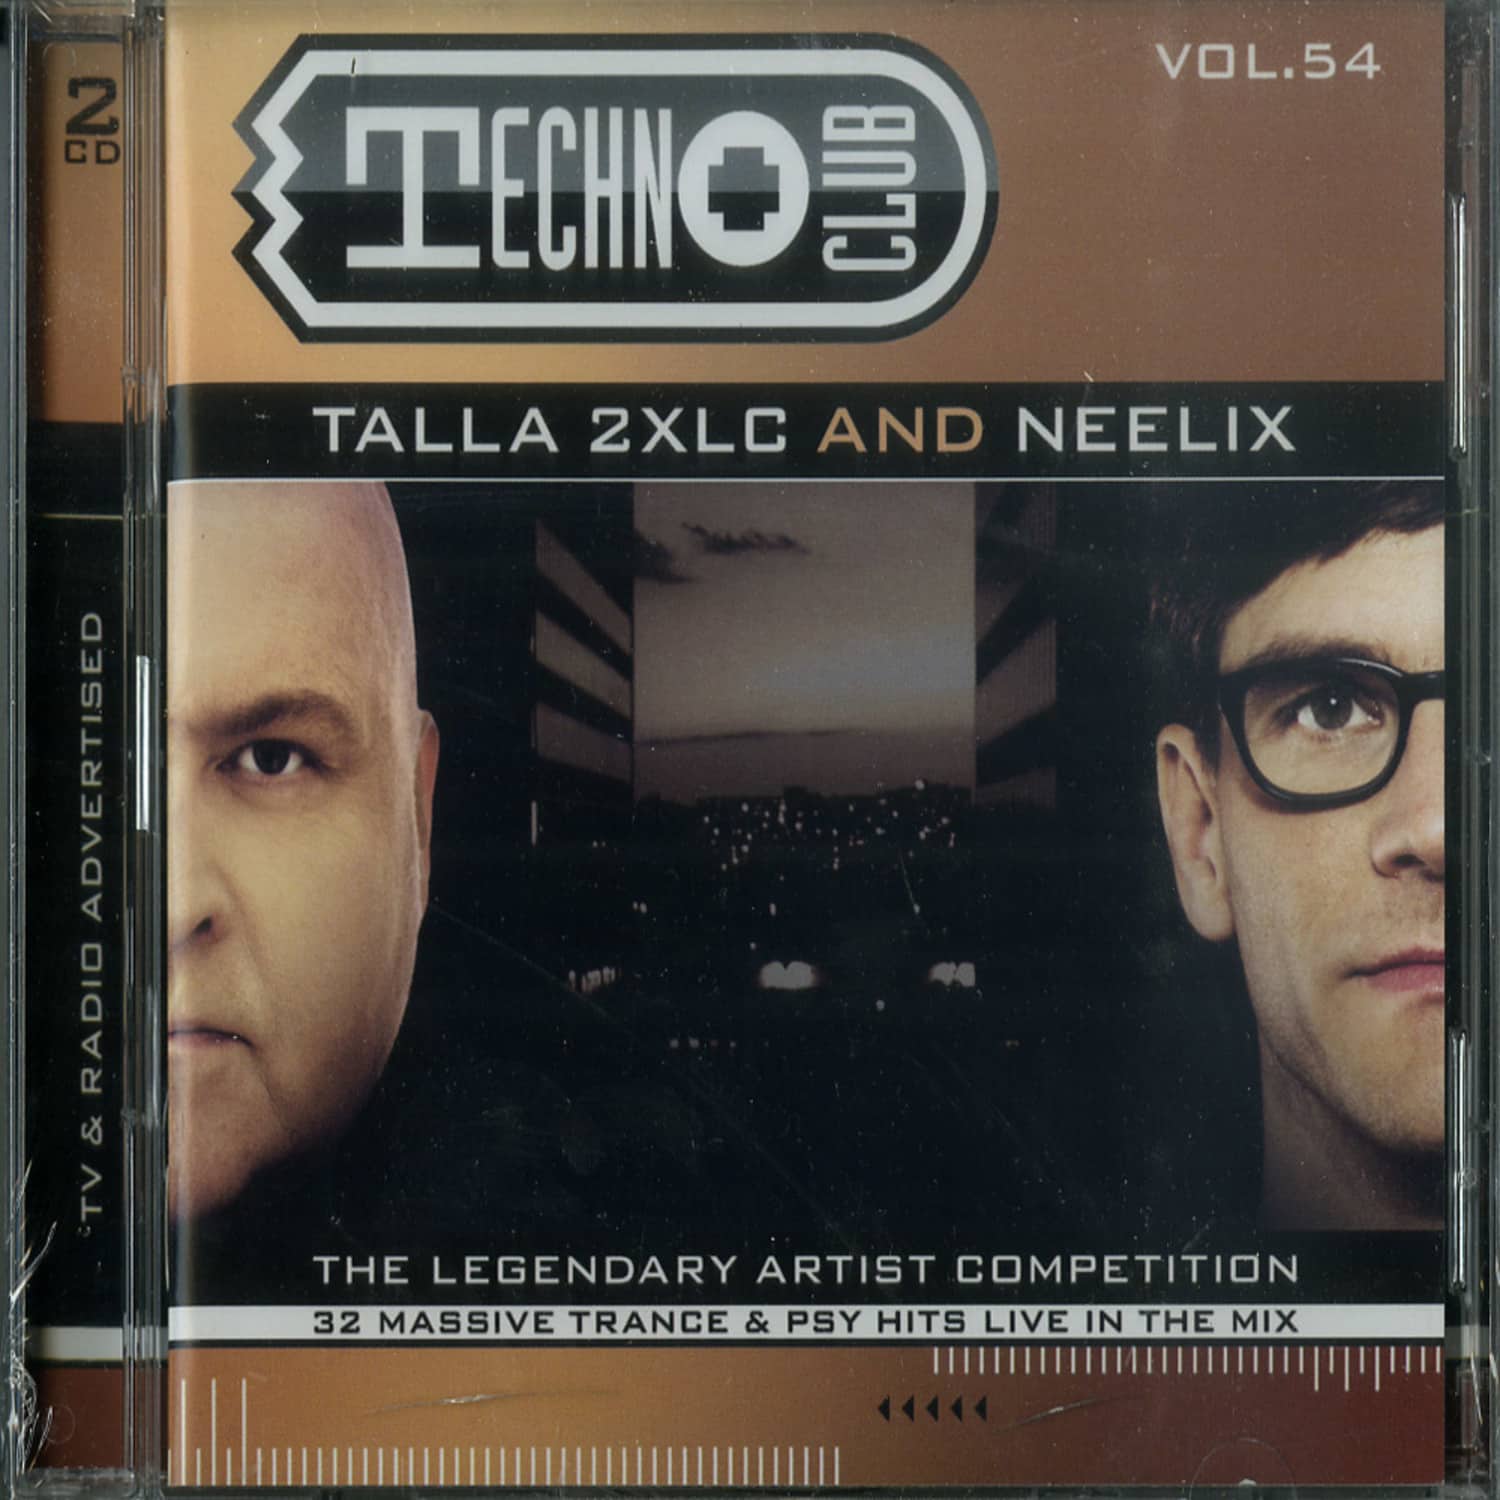 Mixed By Talla 2xlc & Neelix - TECHNO CLUB VOL.54 